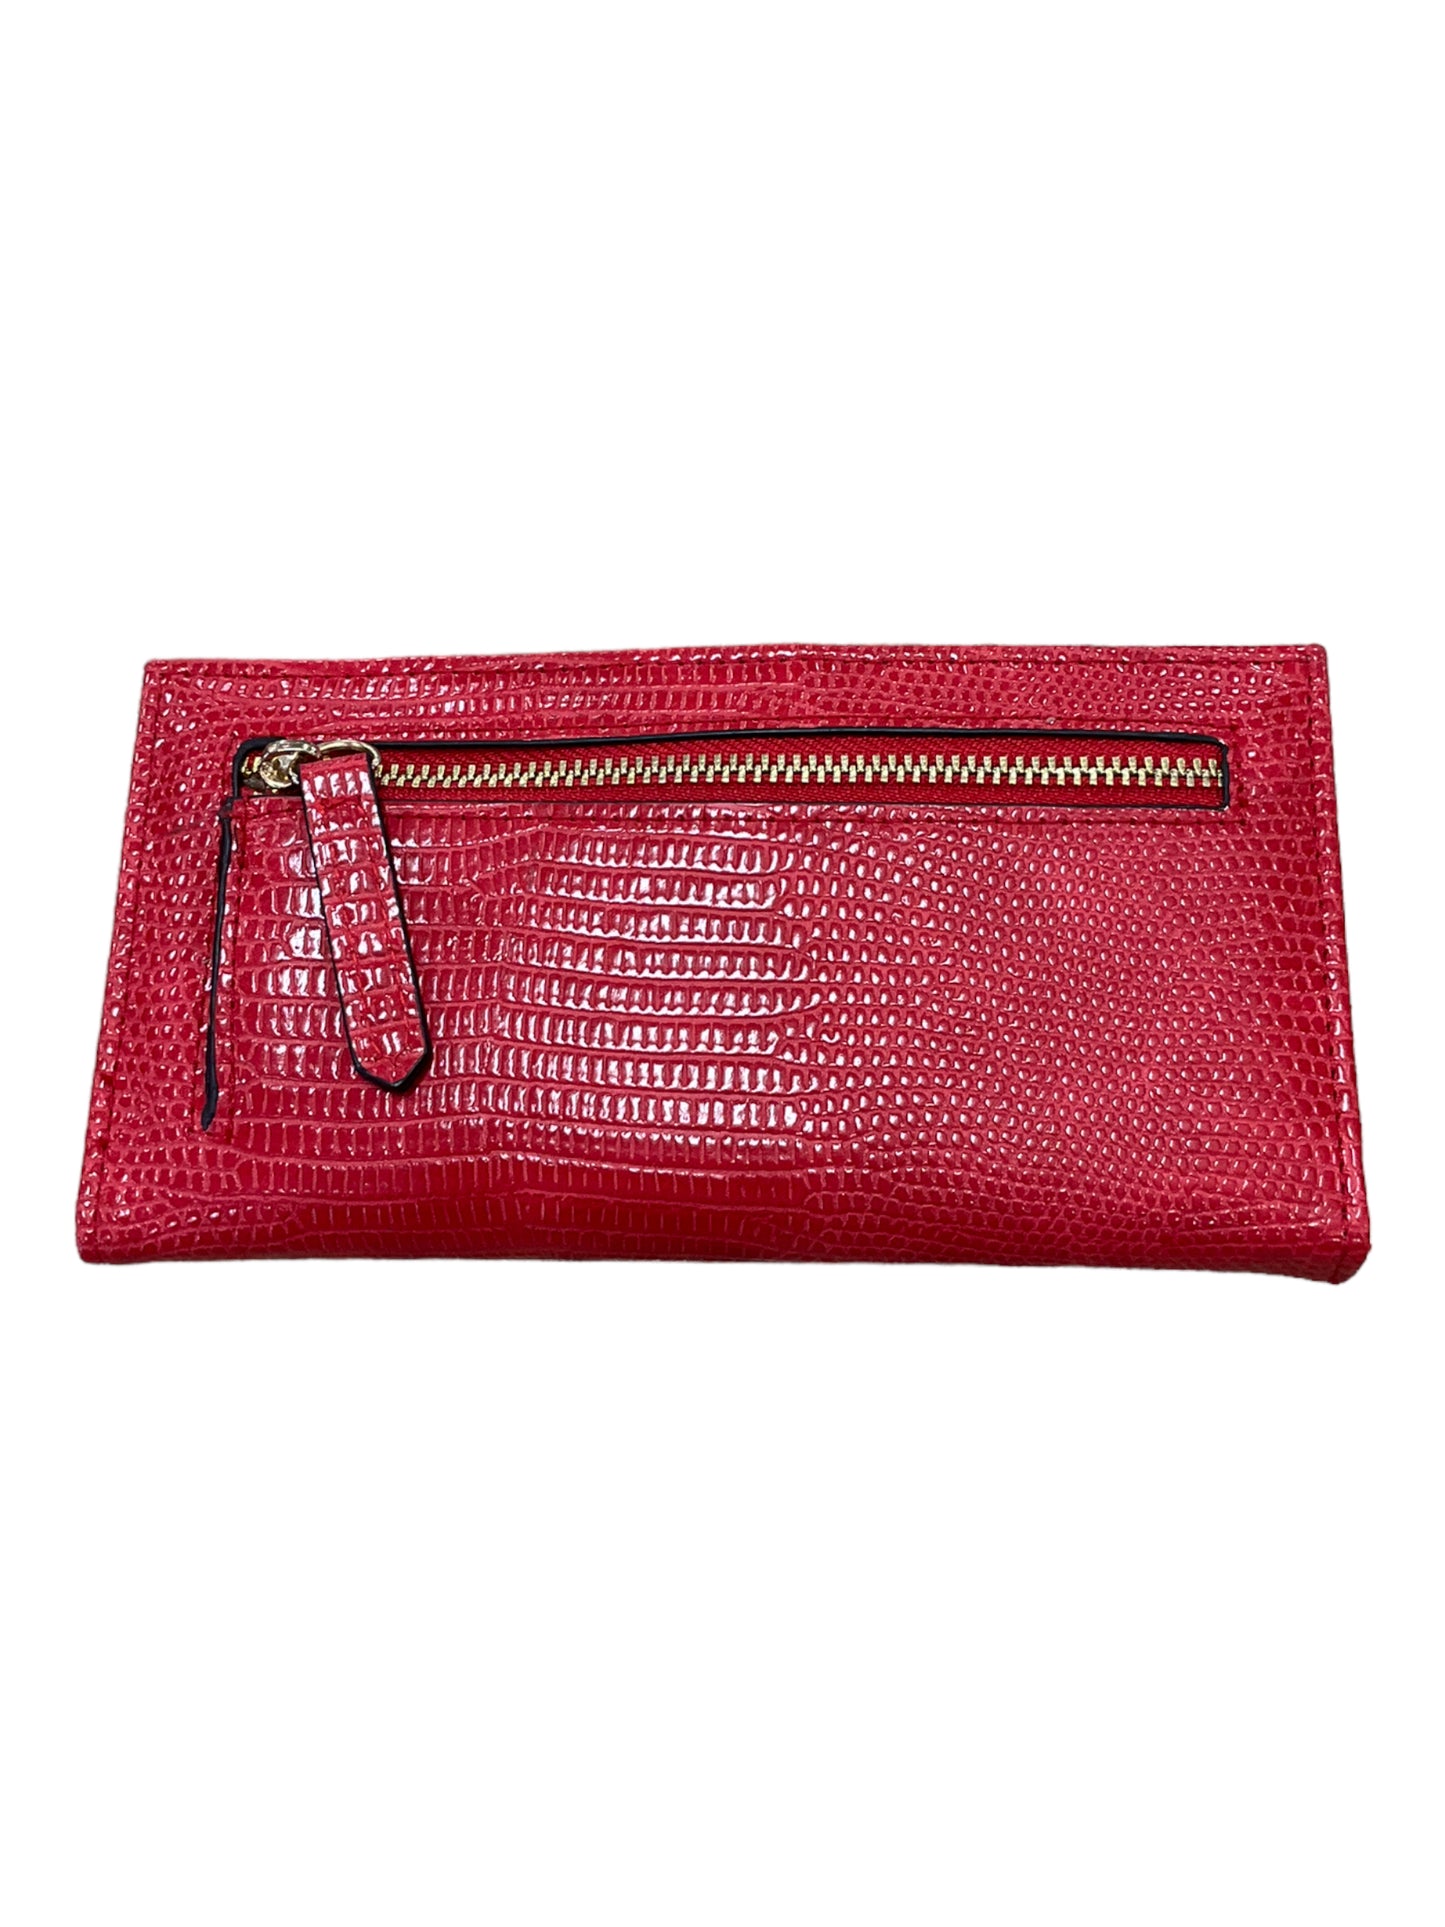 Wallet By Kate Landry  Size: Medium